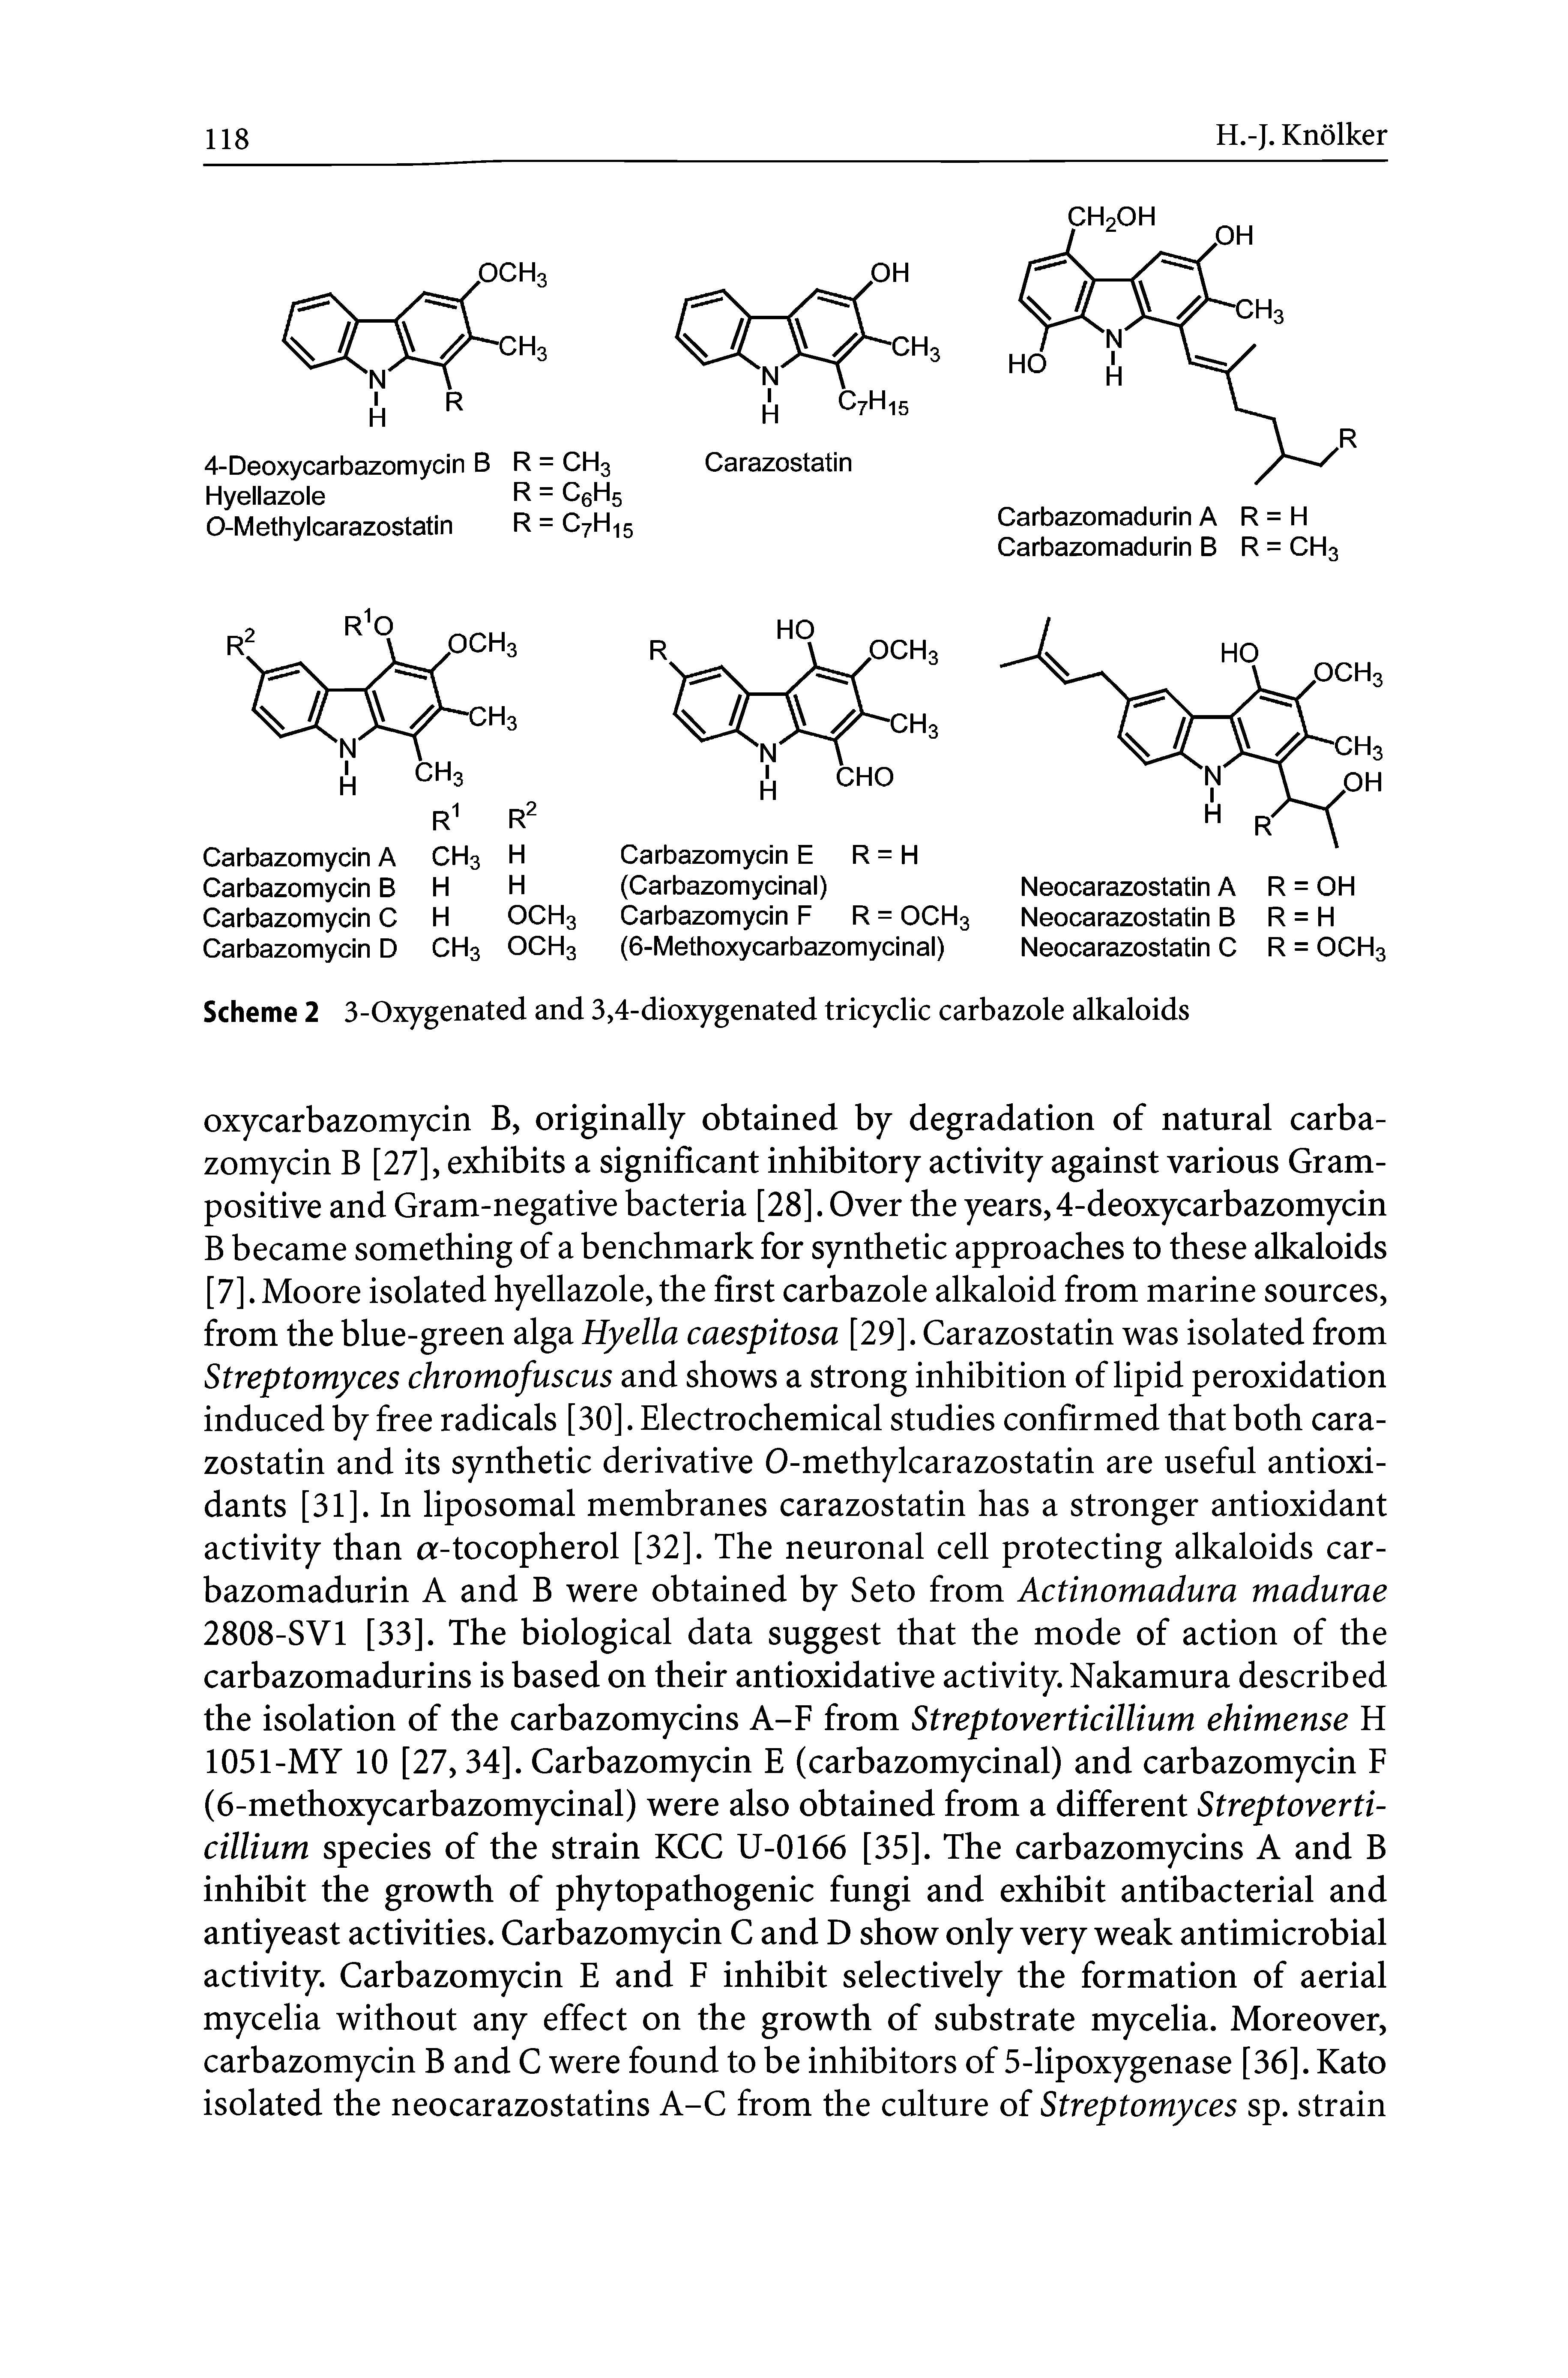 Scheme 2 3-Oxygenated and 3,4-dioxygenated tricyclic carbazole alkaloids...